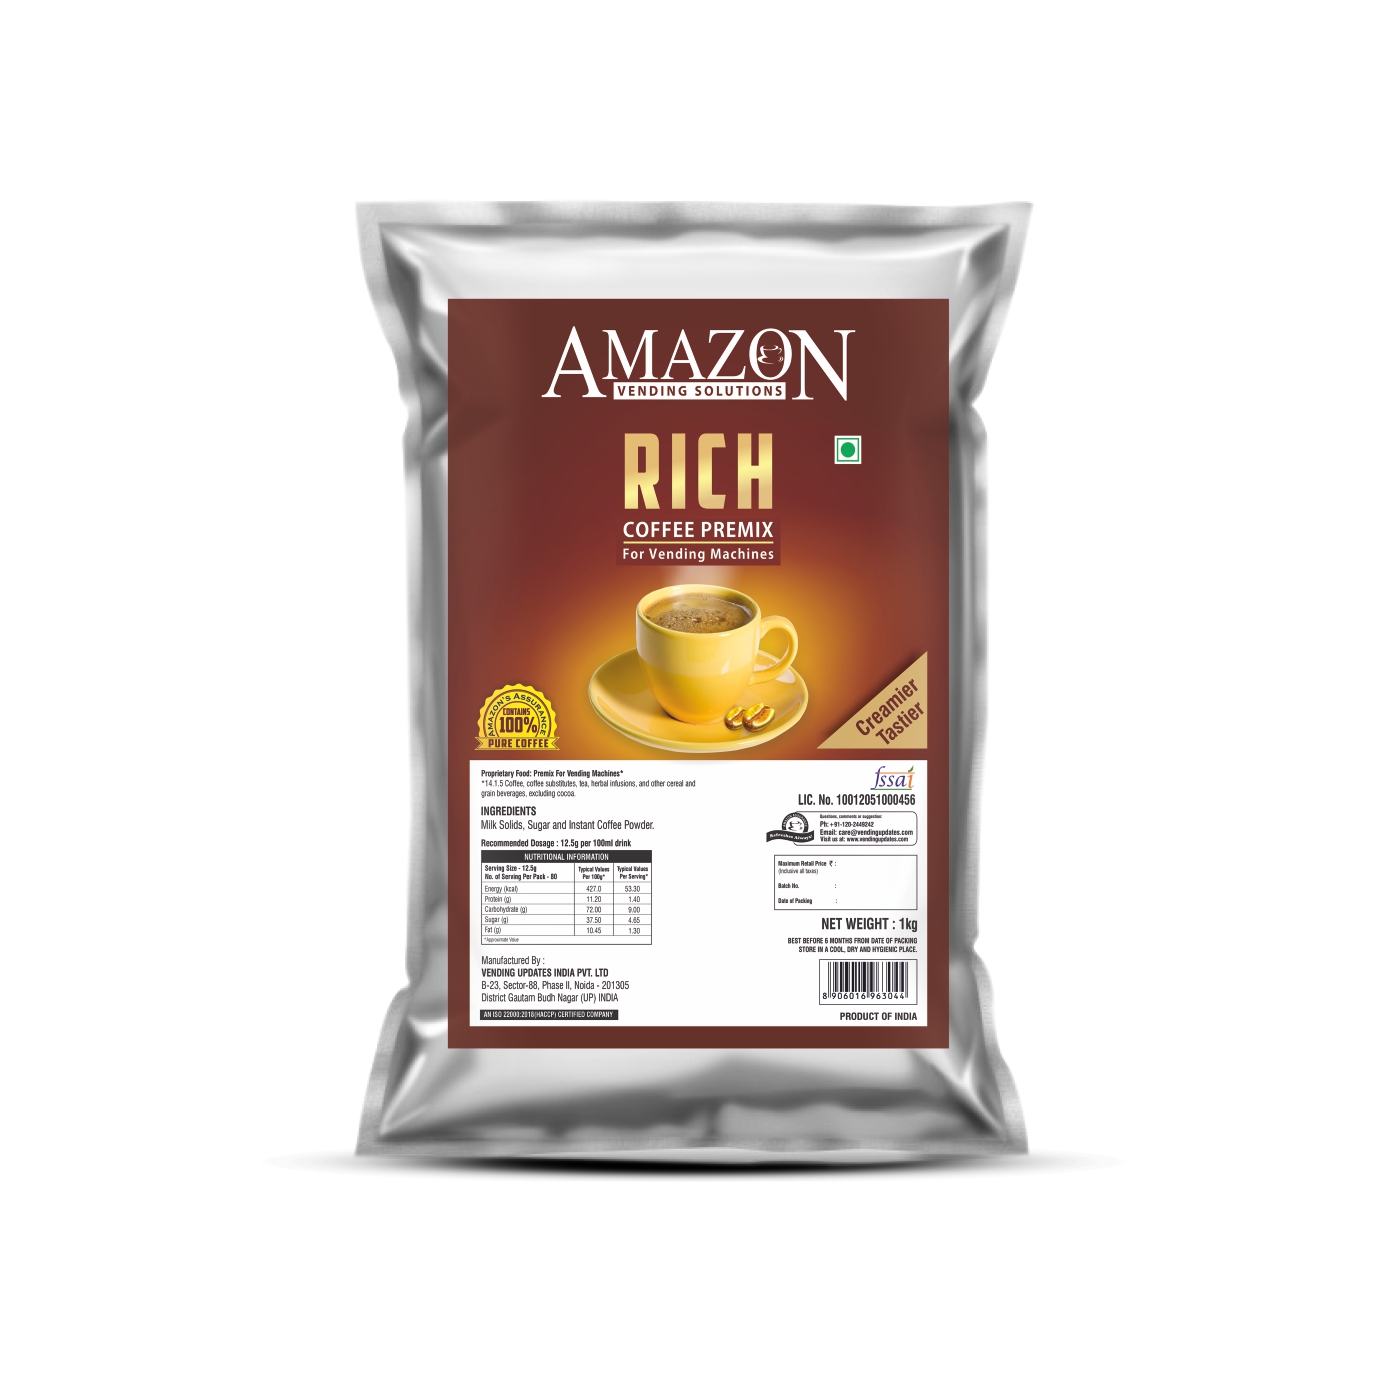 Amazon 3 in 1 Rich Coffee Premix 1 Kg Pack